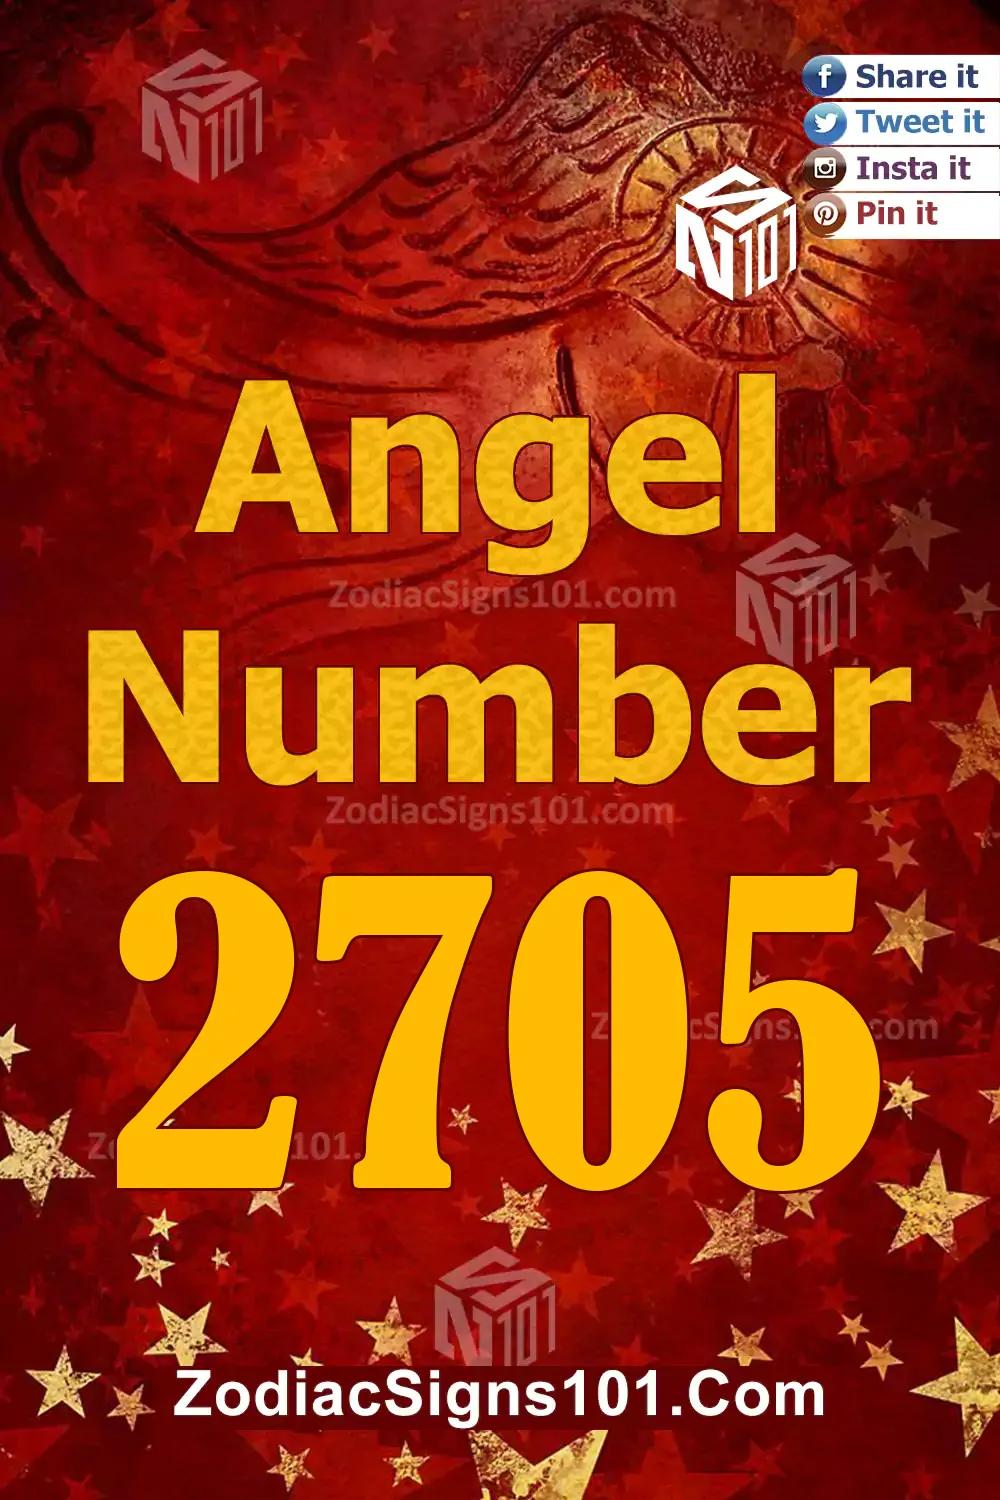 2705-Angel-Number-Meaning.jpg